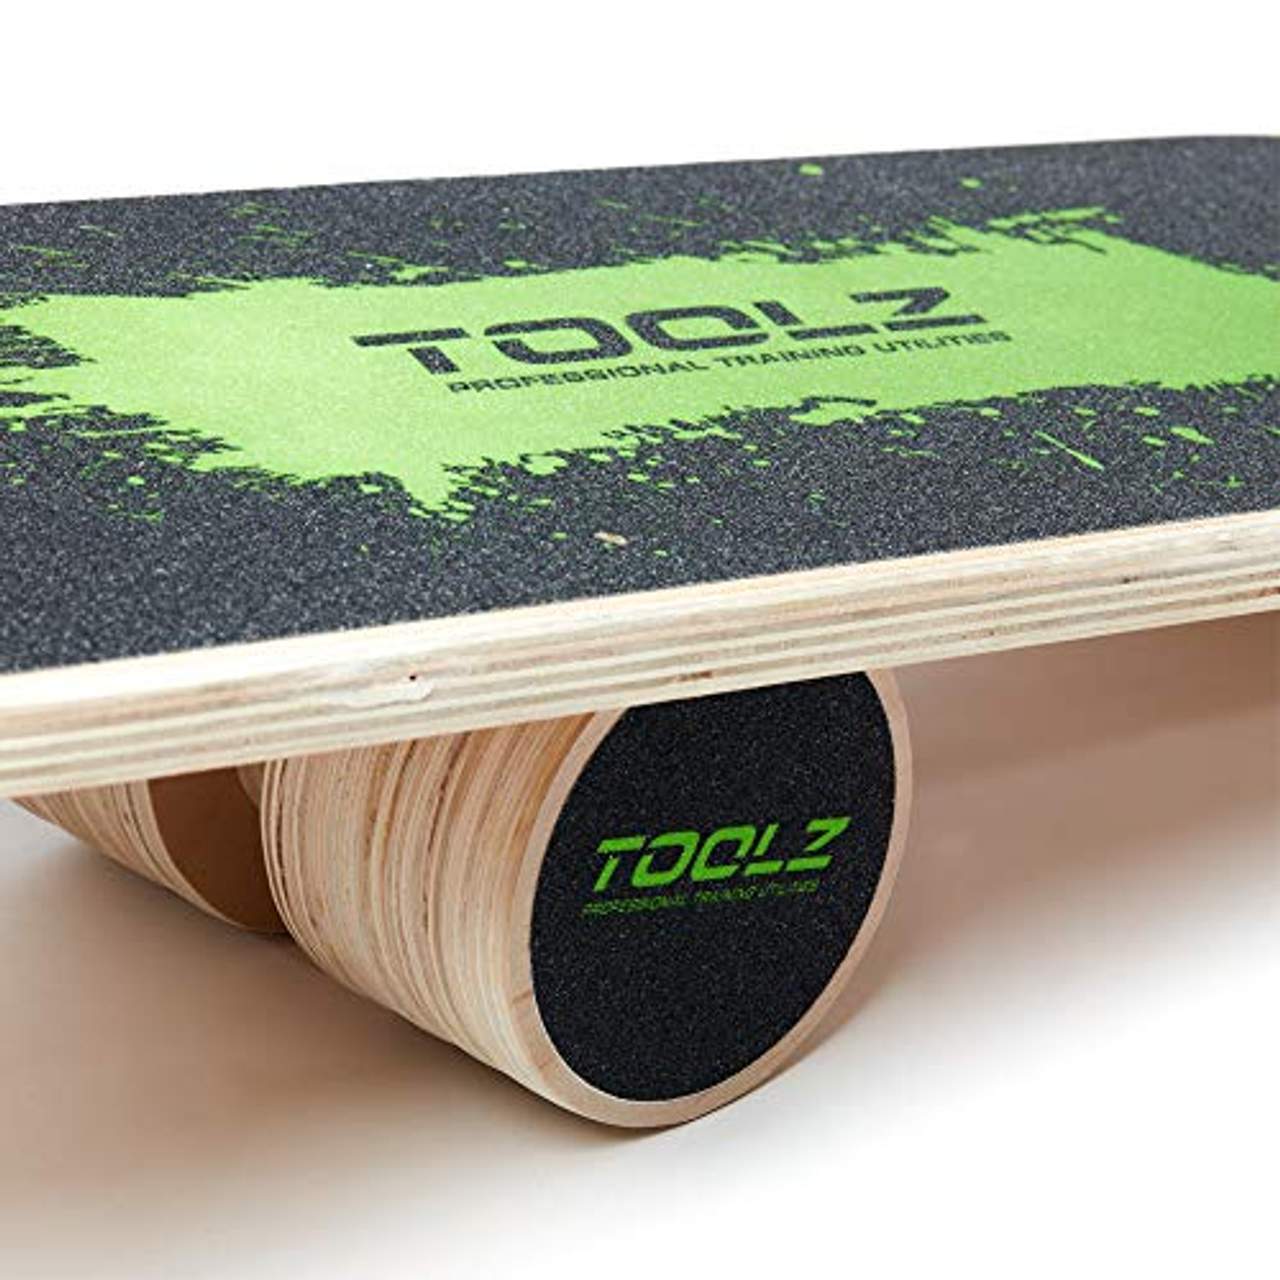 TOOLZ Balance Board Trainer